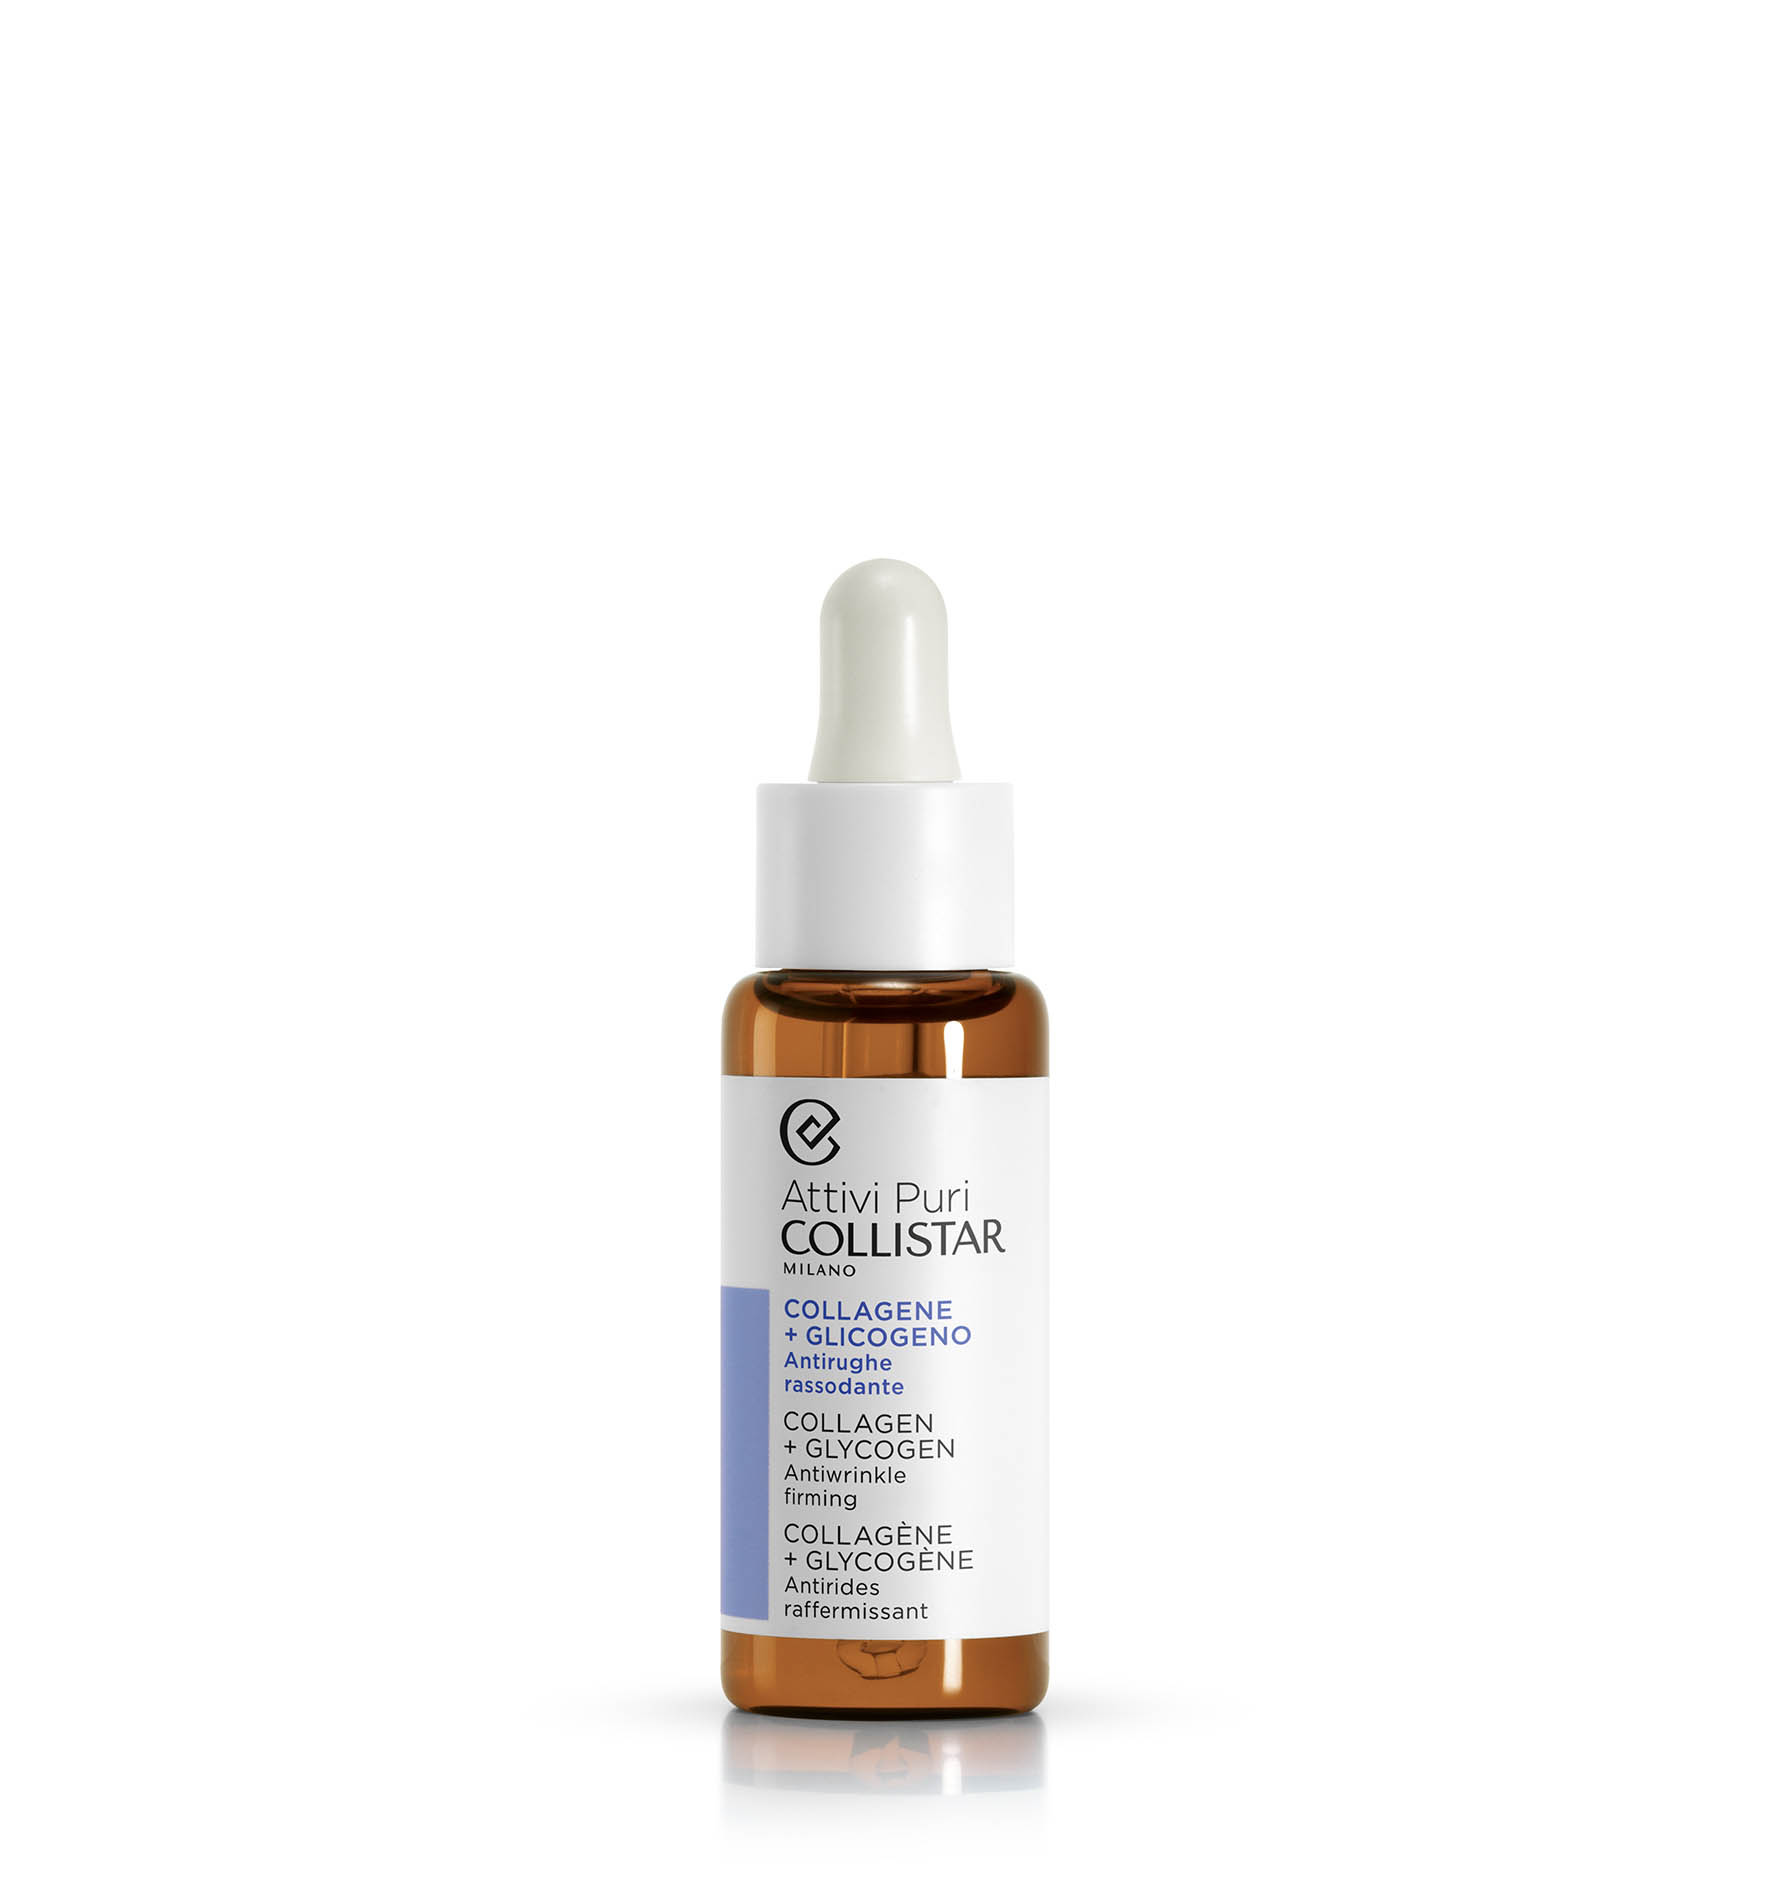 COLLAGEN + GLYCOGEN 30 ml - Gevoelige huid | Collistar - Shop Online Ufficiale